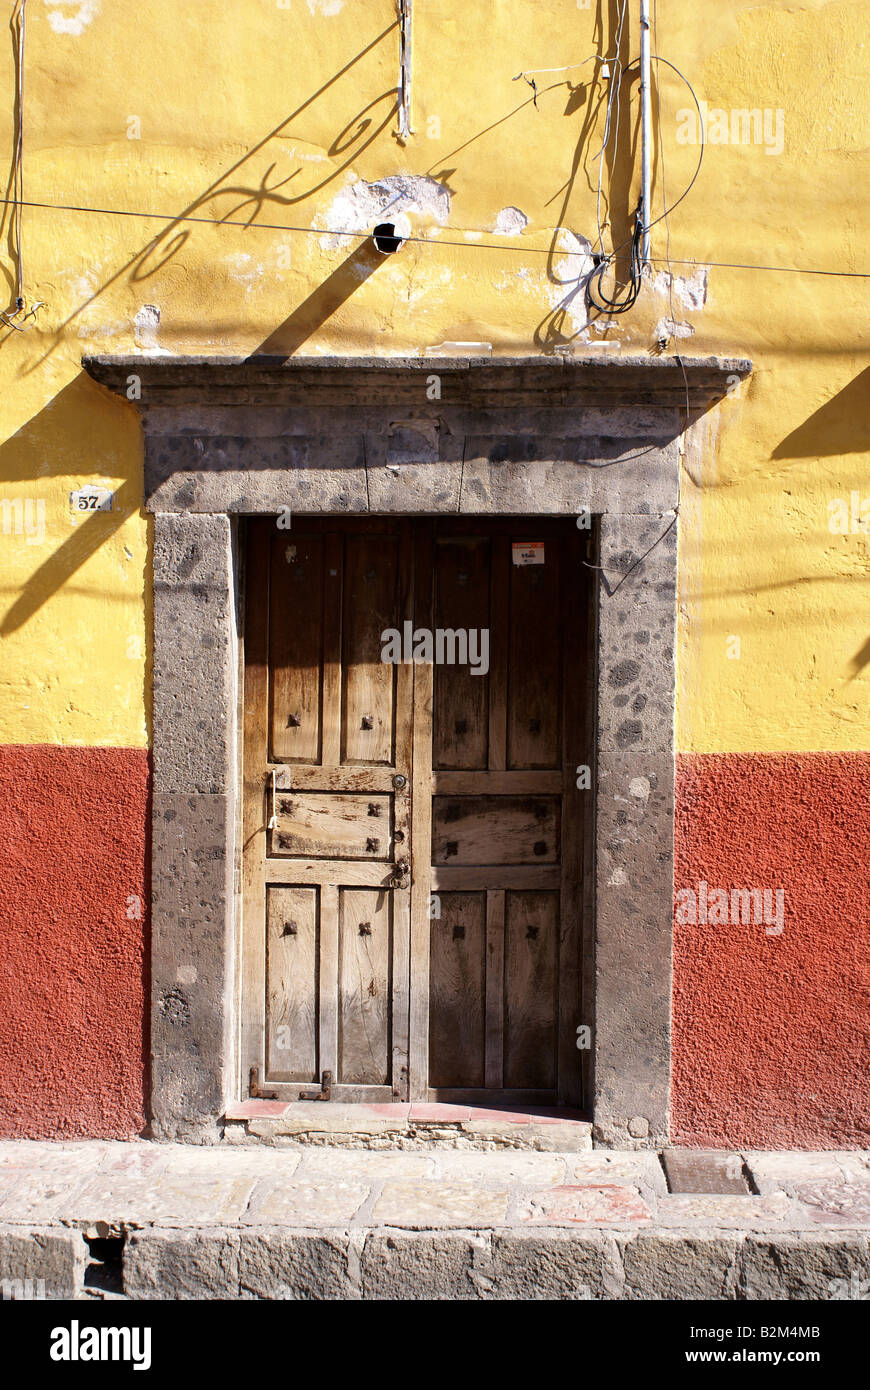 Puerta antigua mexico fotografías e imágenes de alta resolución - Alamy